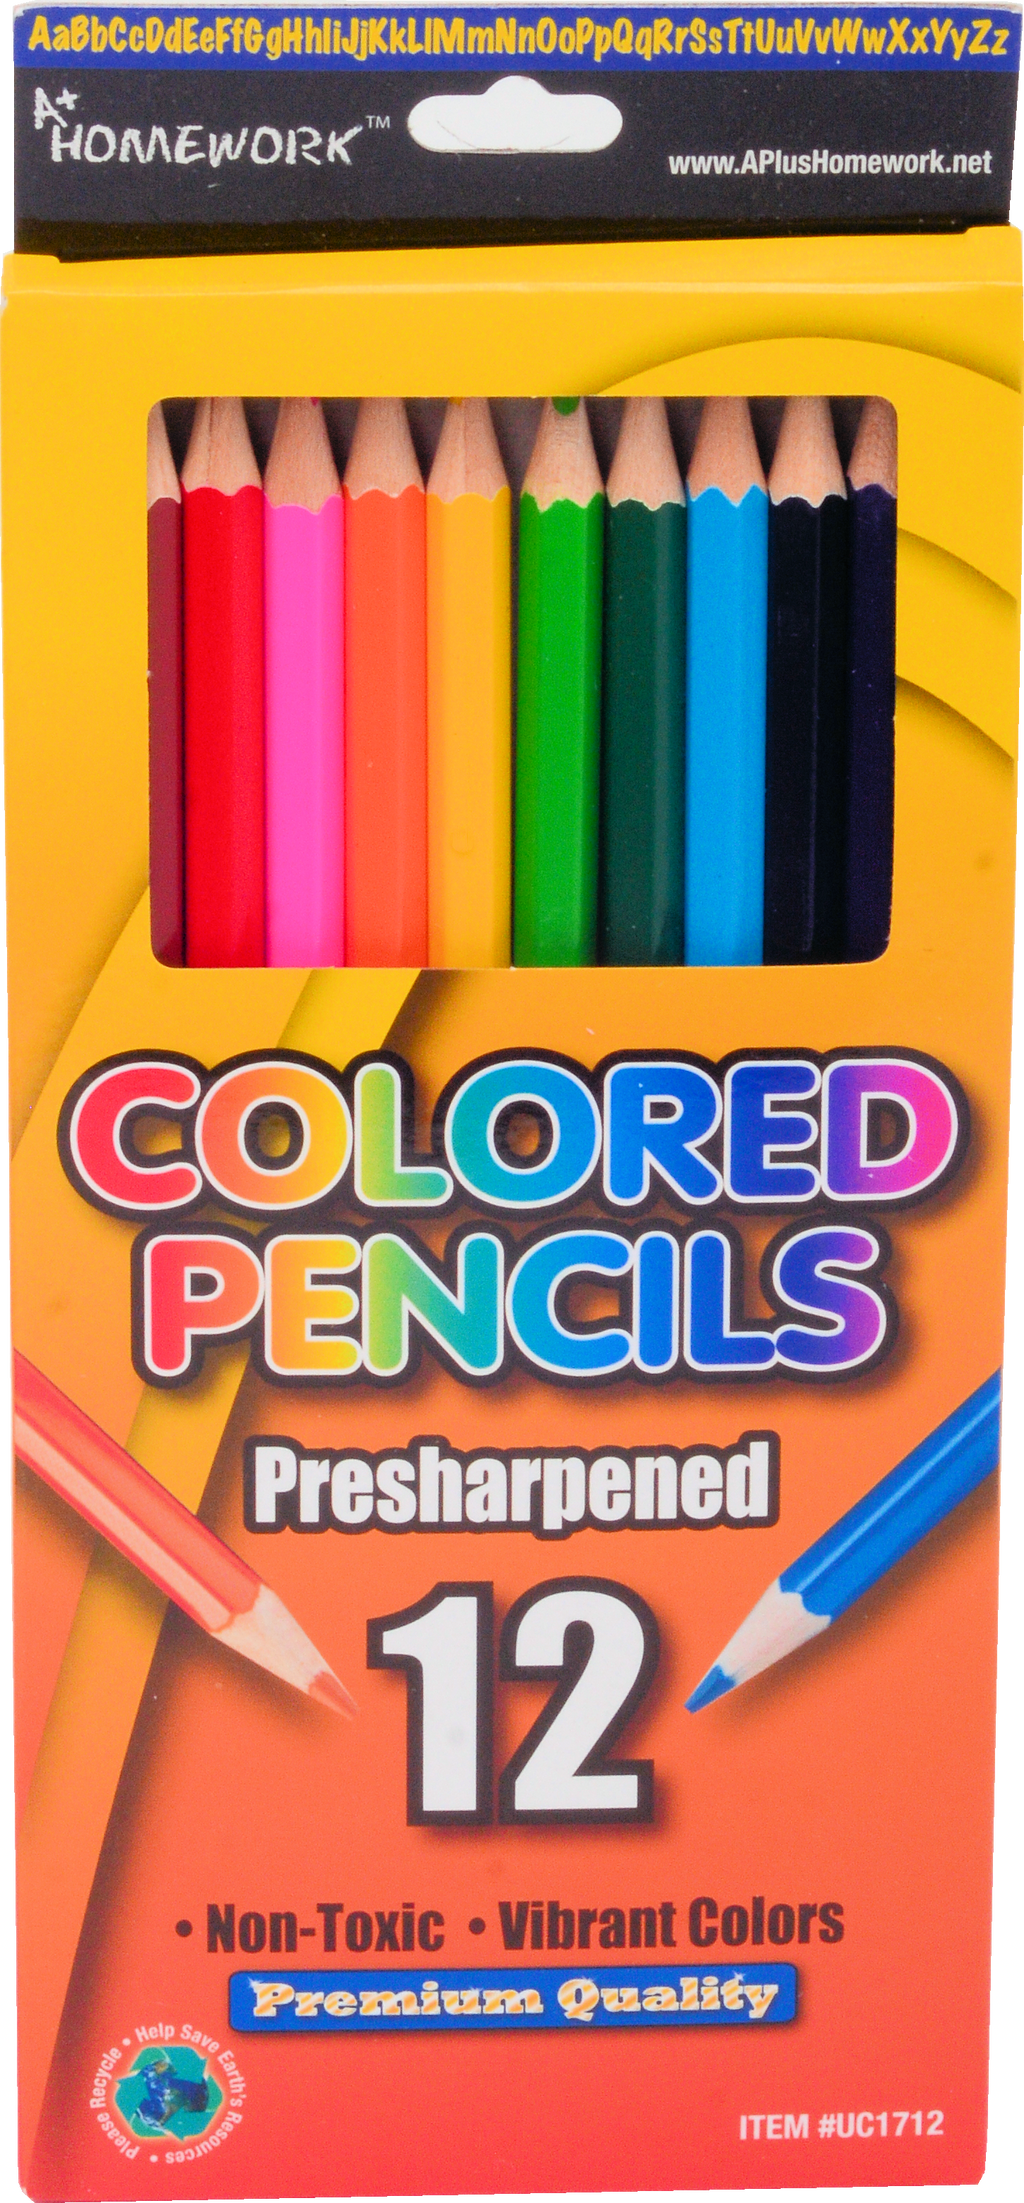 Colored Pencils - KS Gift Baskets